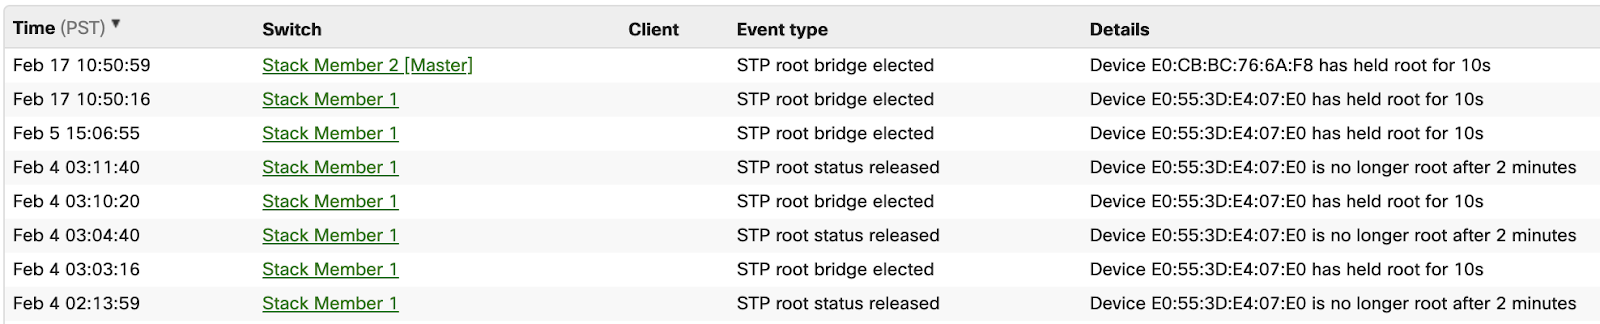 STP Root Status Released